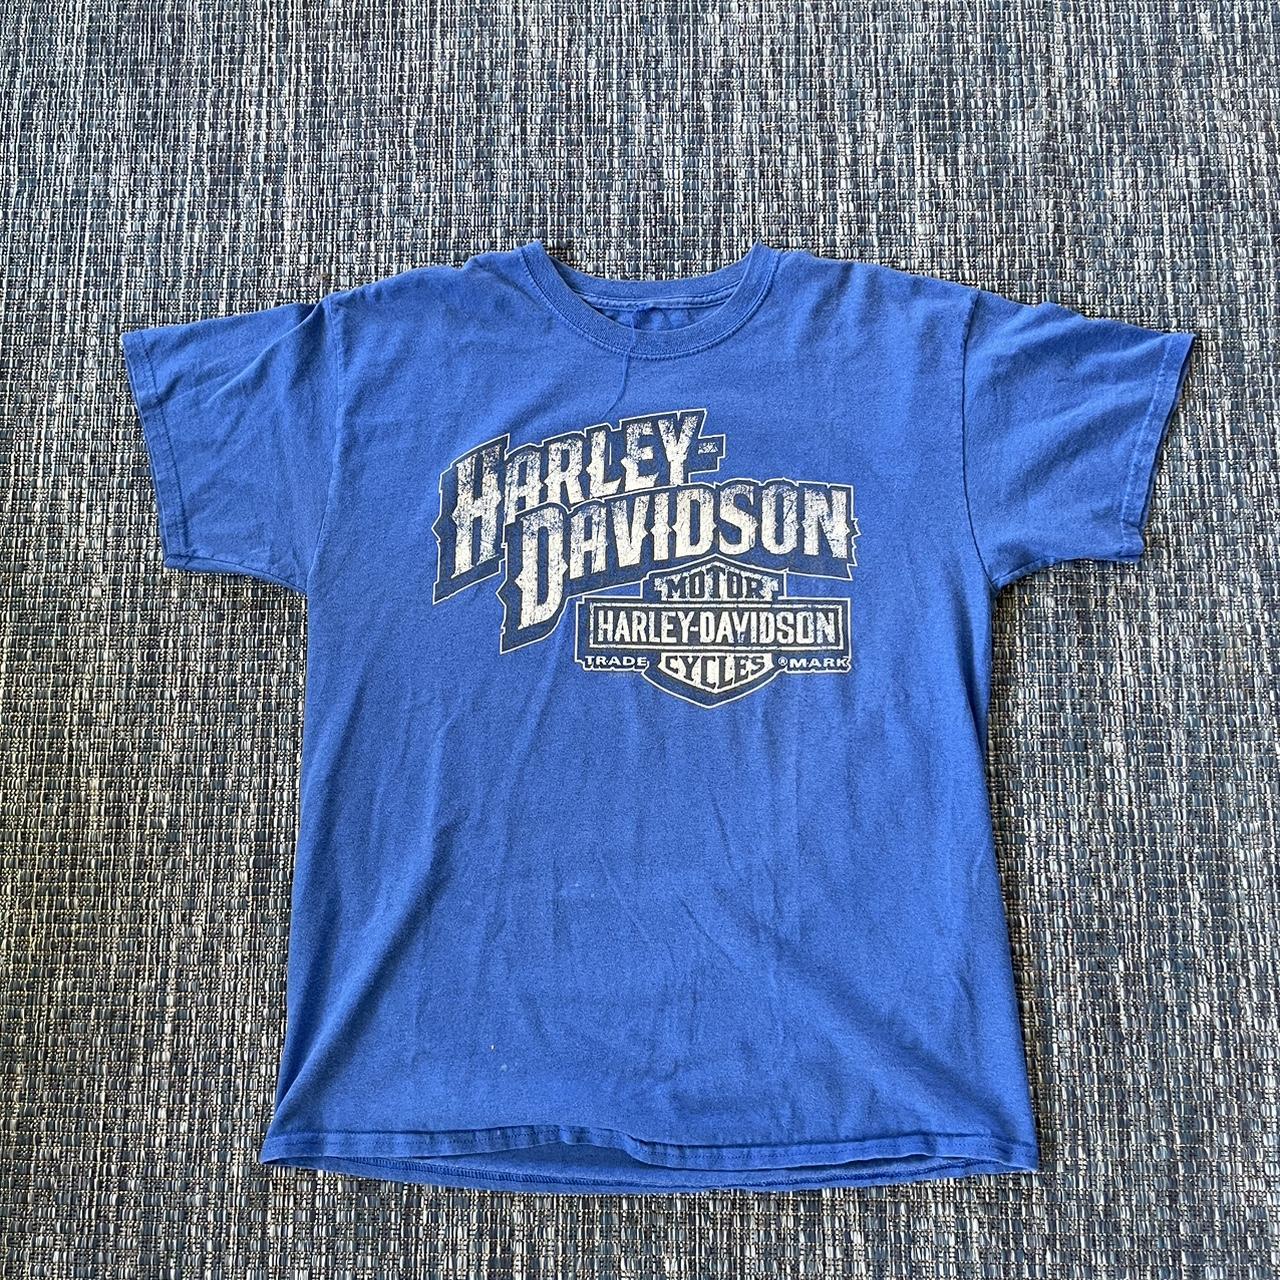 Harley Davidson t shirt • good condition • size L - Depop